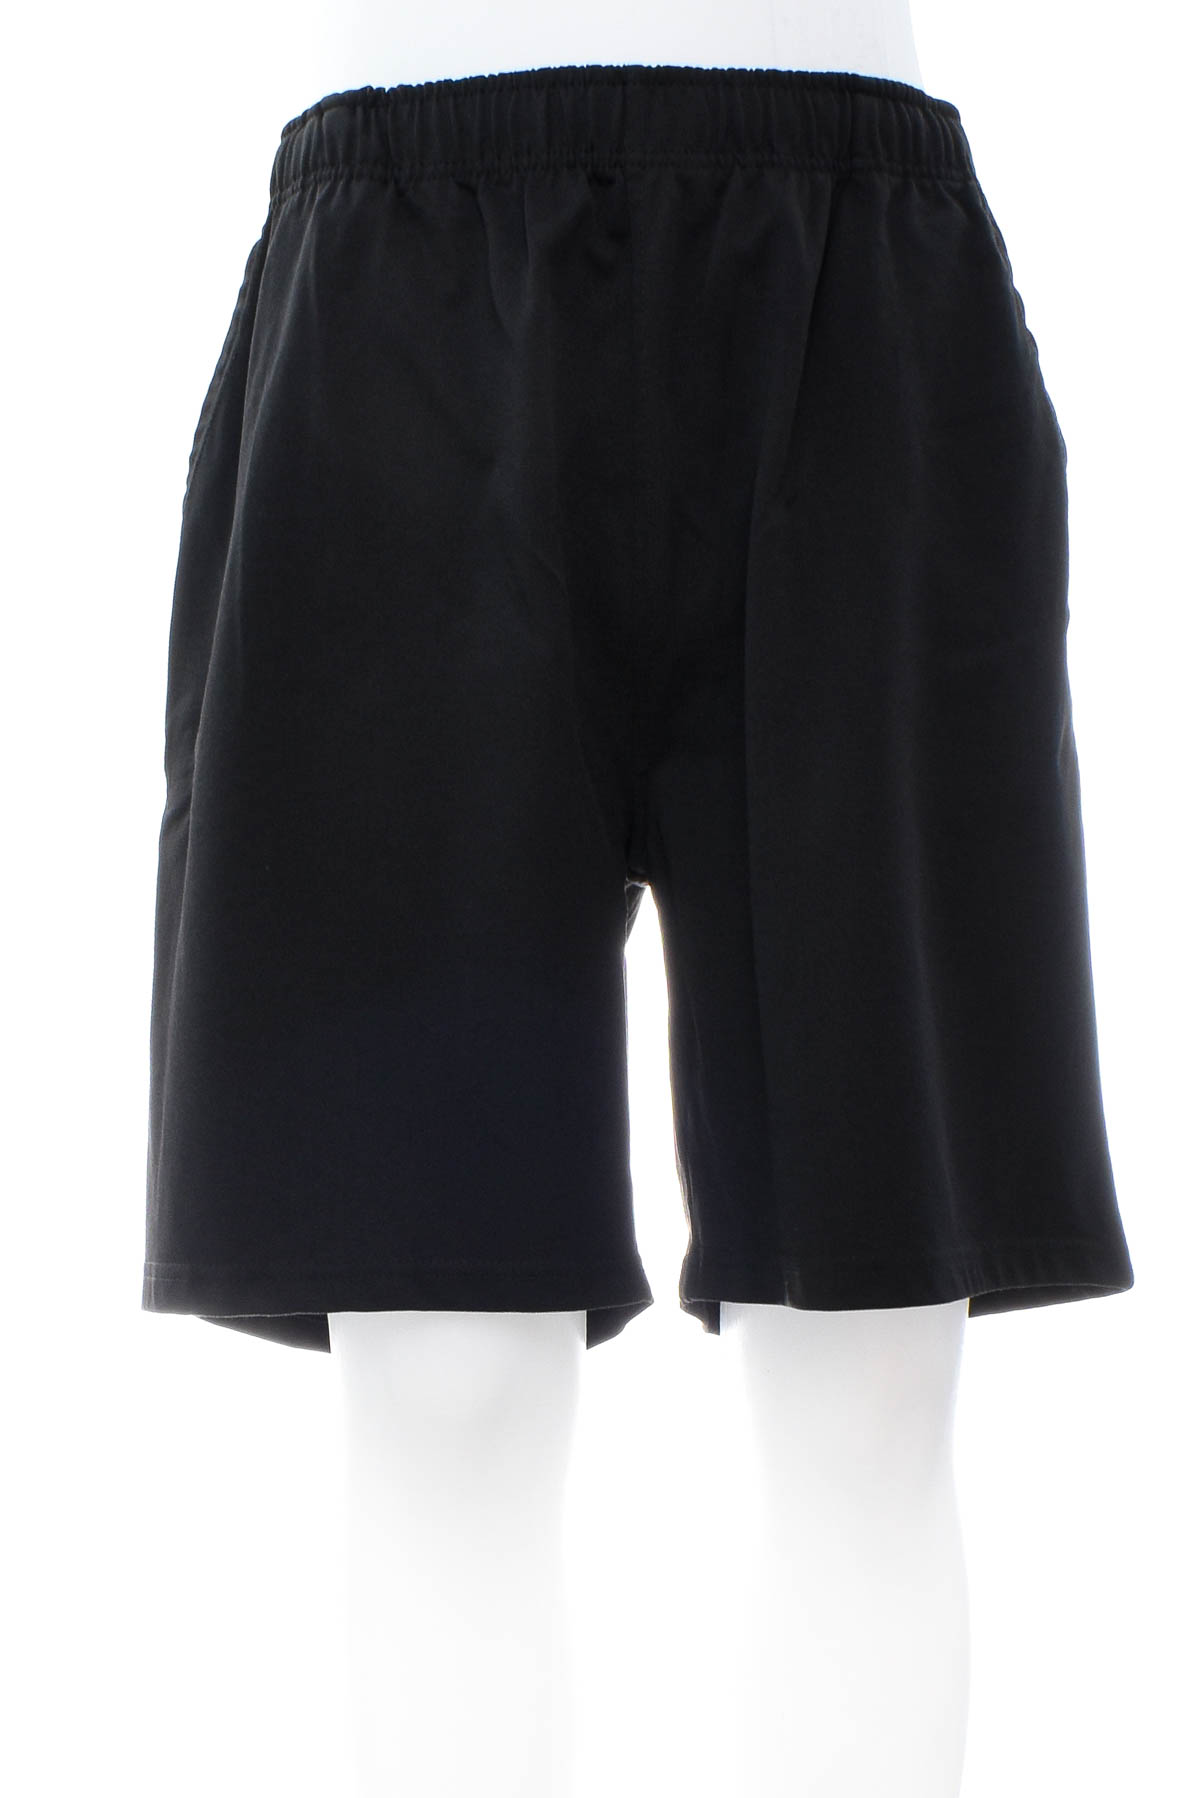 Men's shorts - Crane - 0